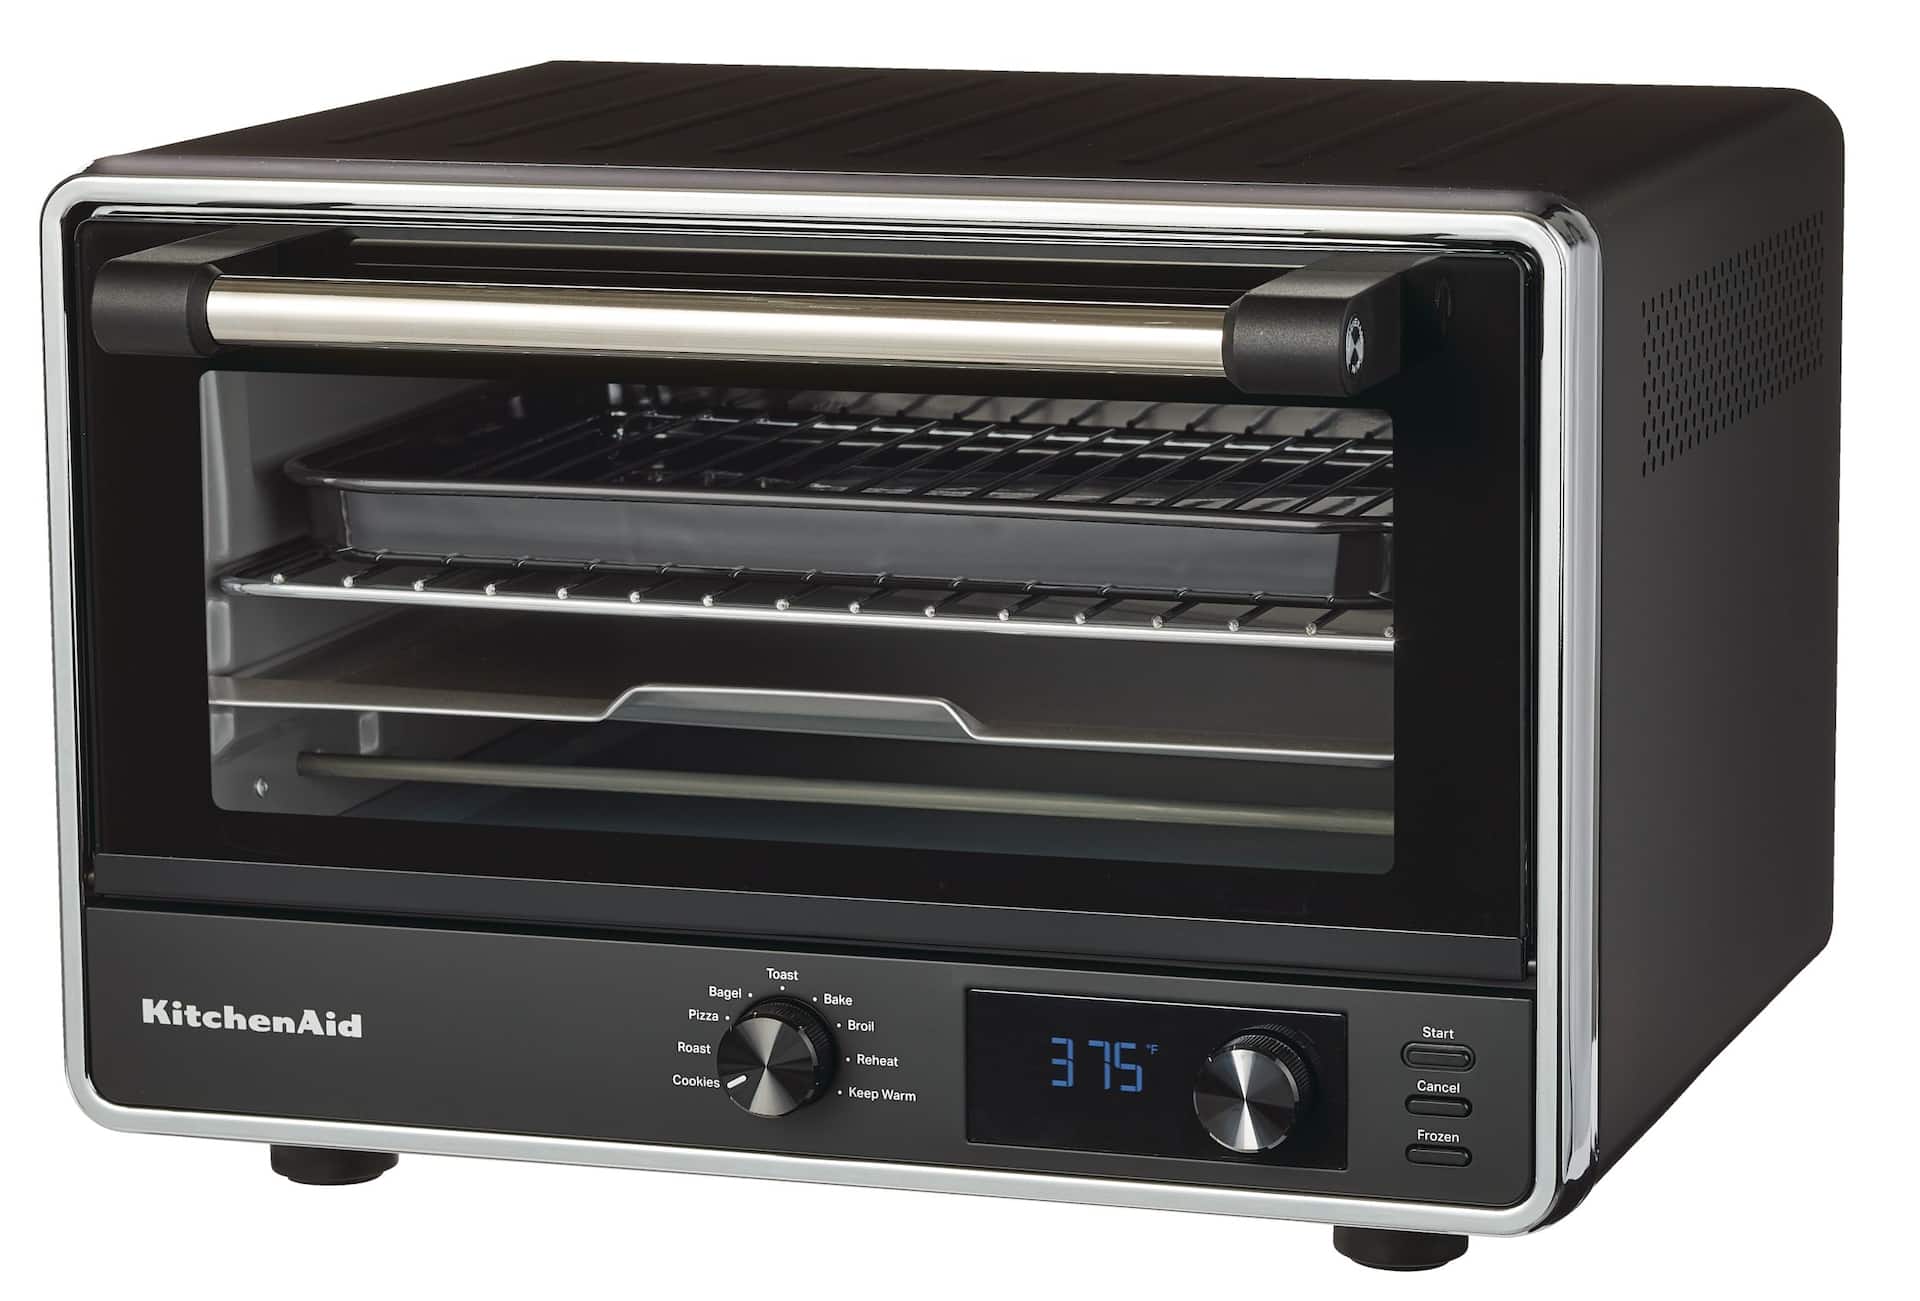 KitchenAid Hot air Fryer Oven - Black Matte - KCO124BM